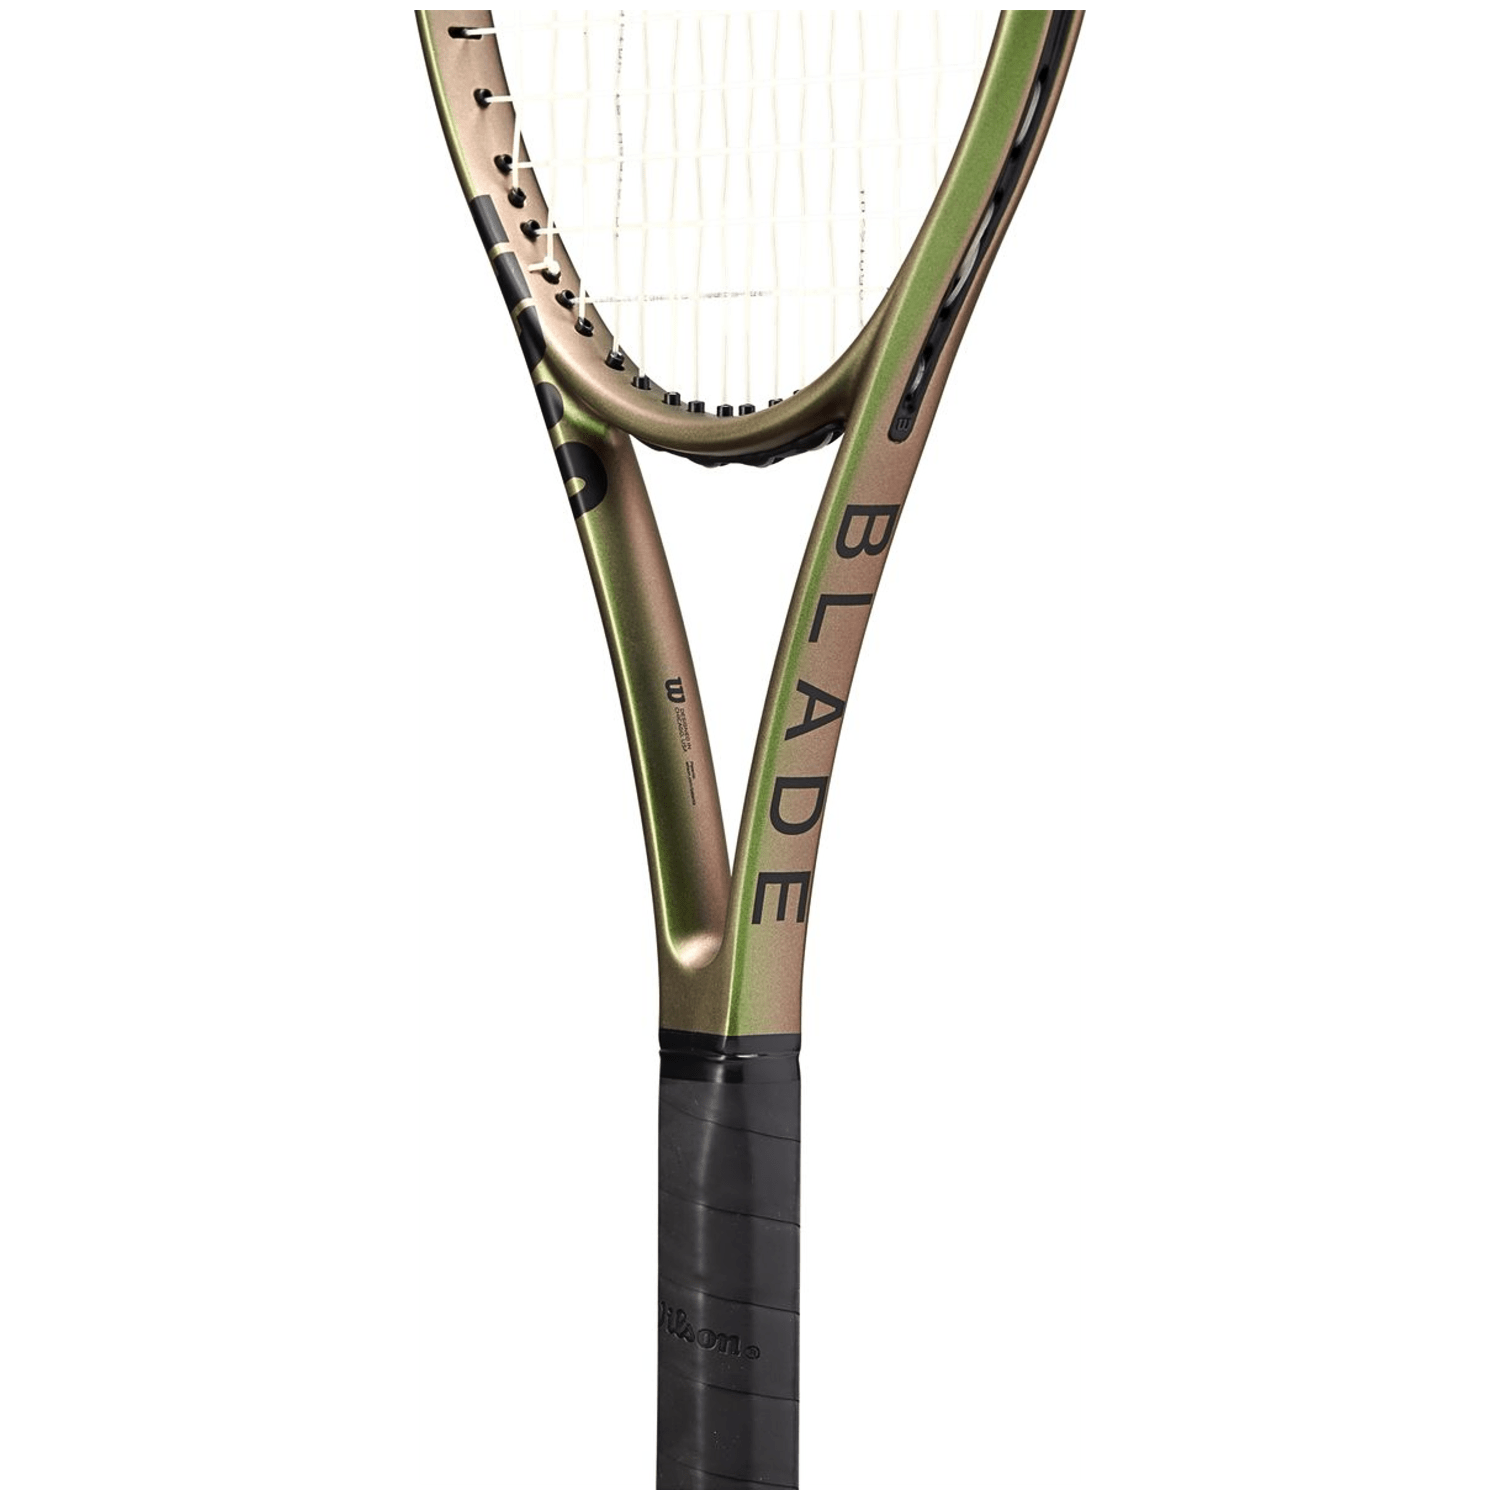 Wilson Blade 104 V8.0 FRM Tennisschläger